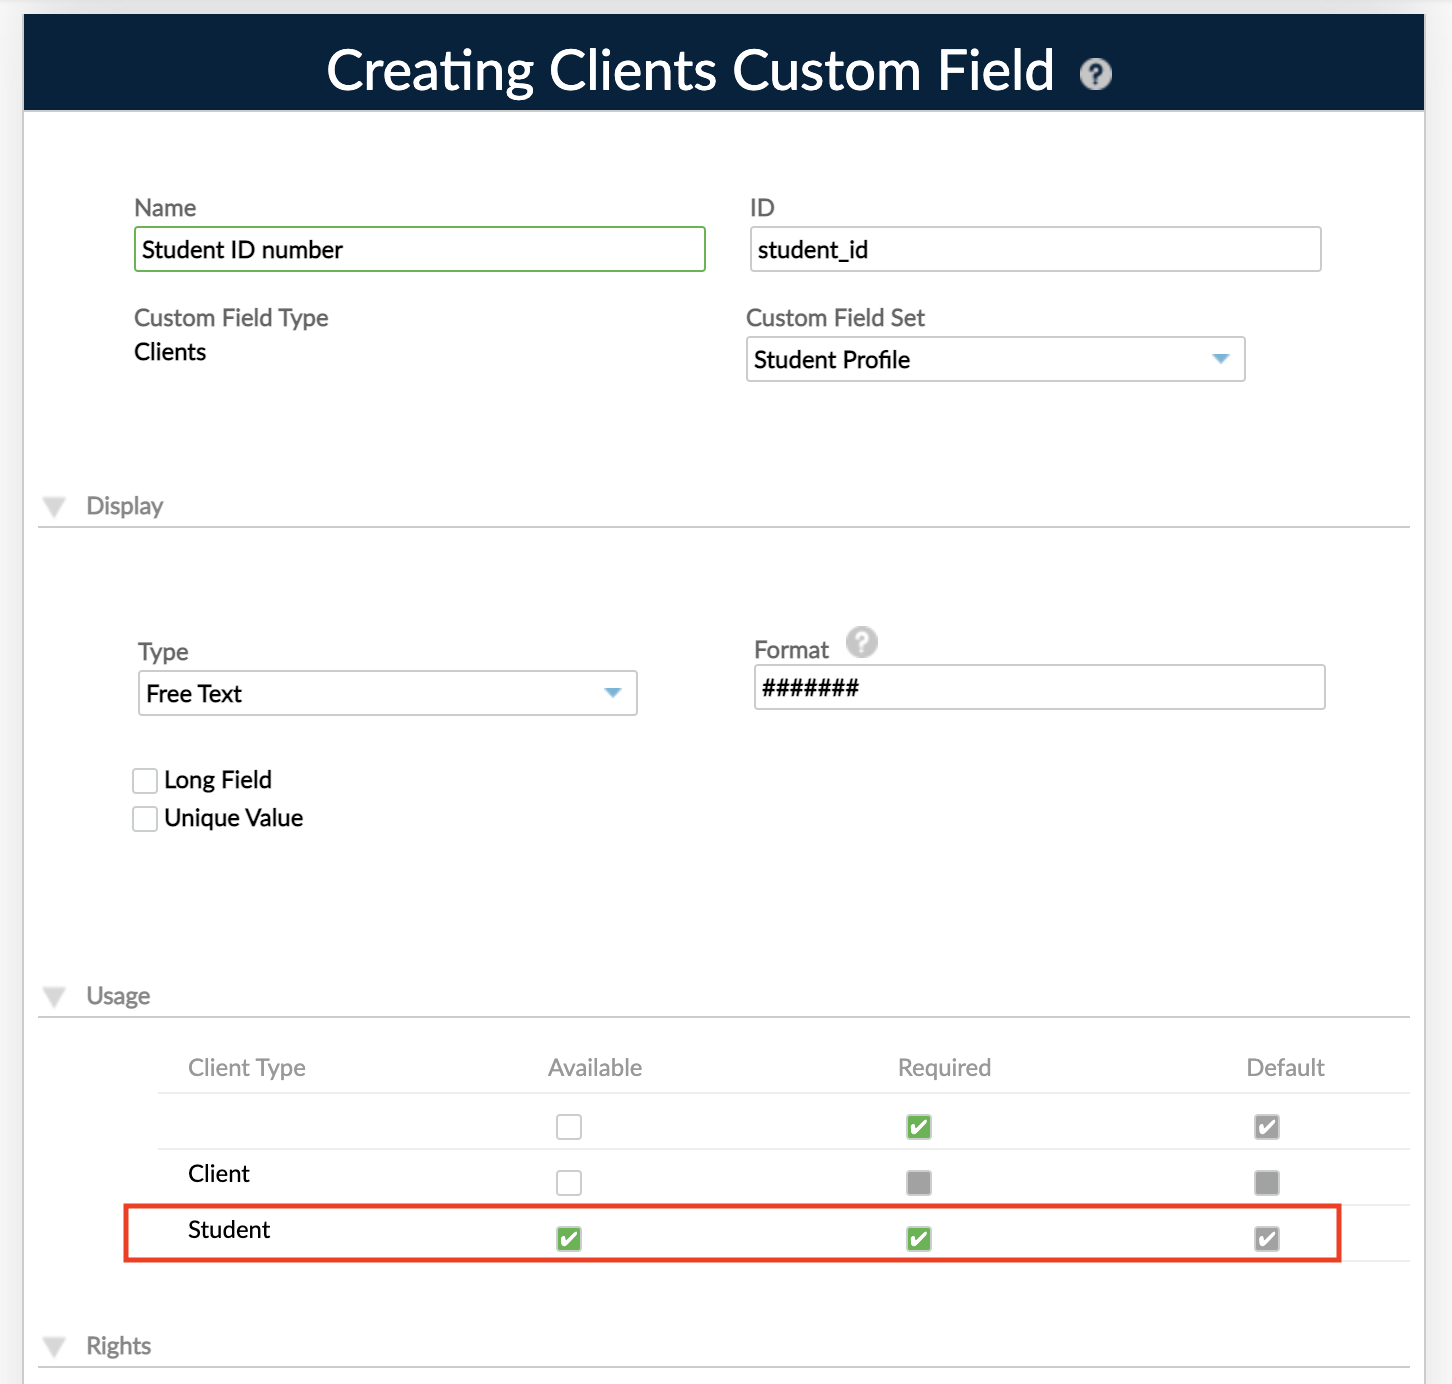 Creating Client Custom Field Dialog